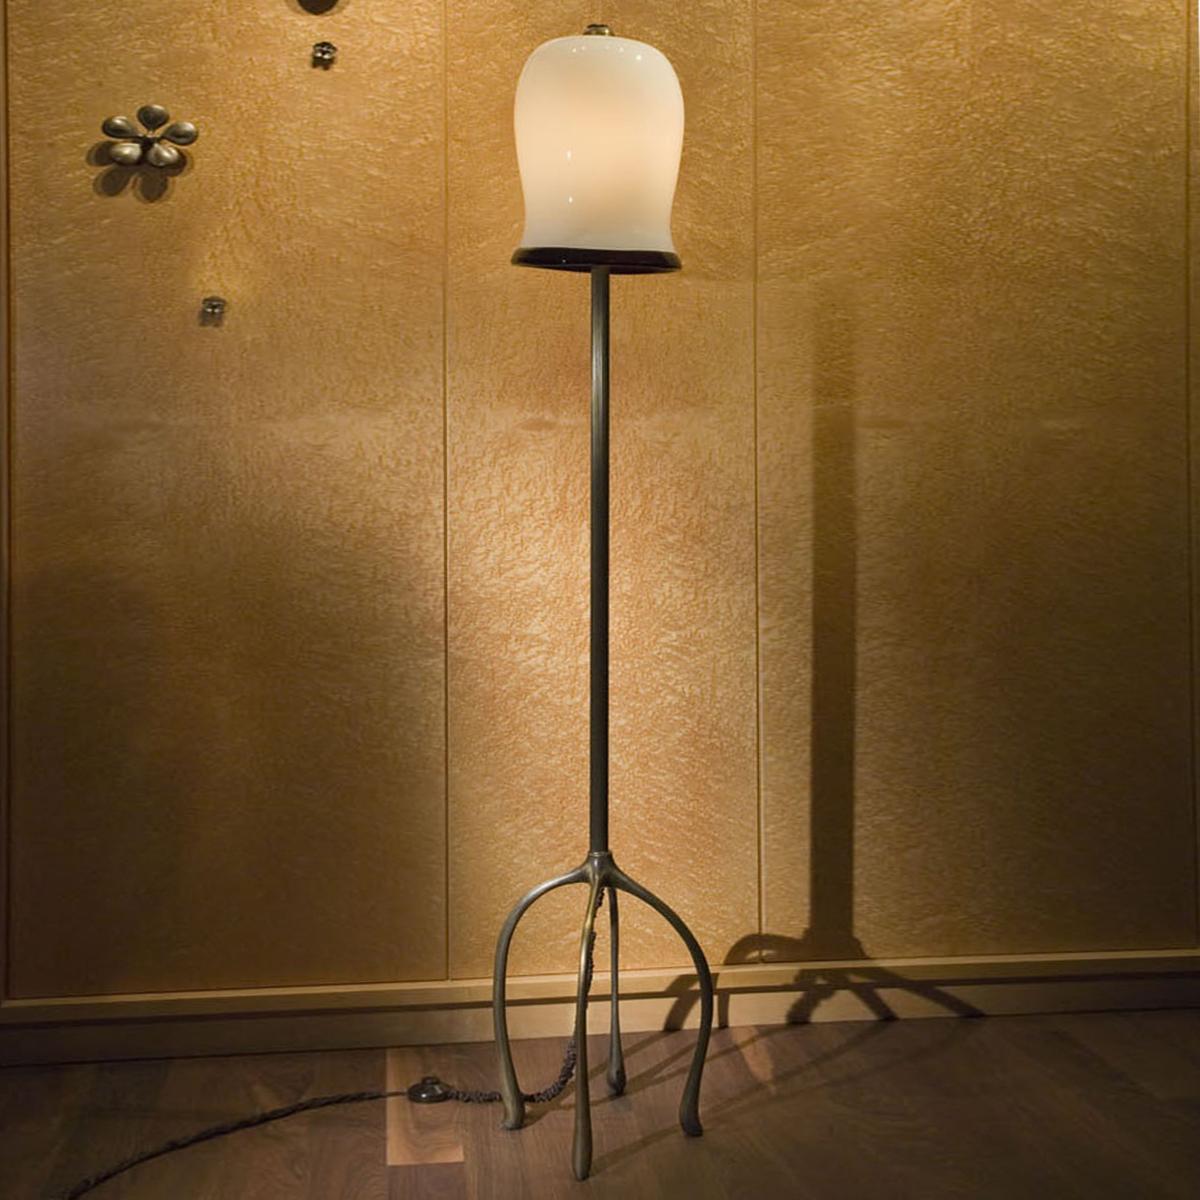 Jordan Mozer (b. 1958), H57 Torchiere/ Floor Lamp; Cast Bronze, Blown Glass, Made in Chicago, USA,  2008.  15